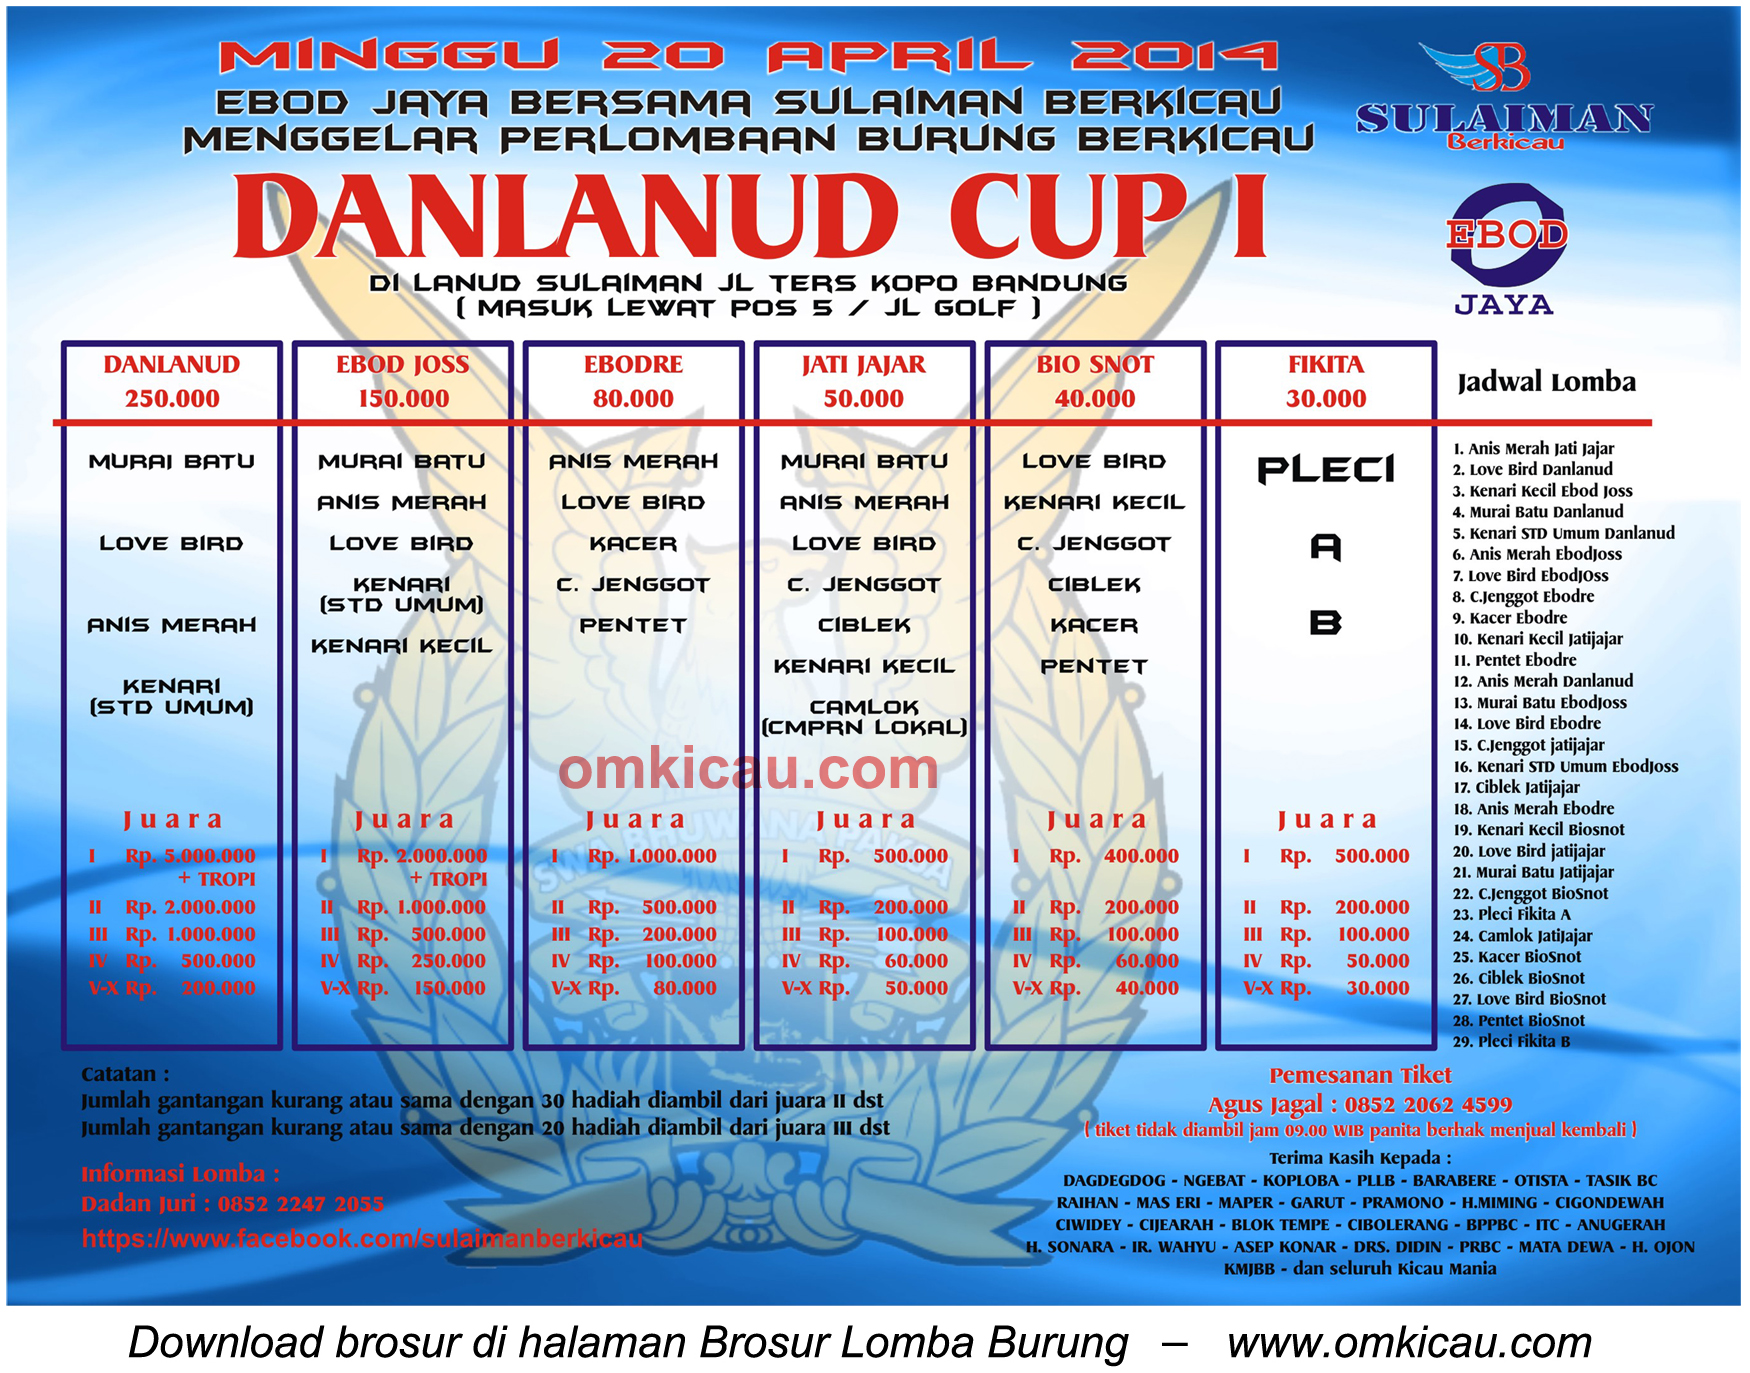 Brosur Lomba Burung Berkicau Danlanud Cup I, Bandung, 20 April 2014